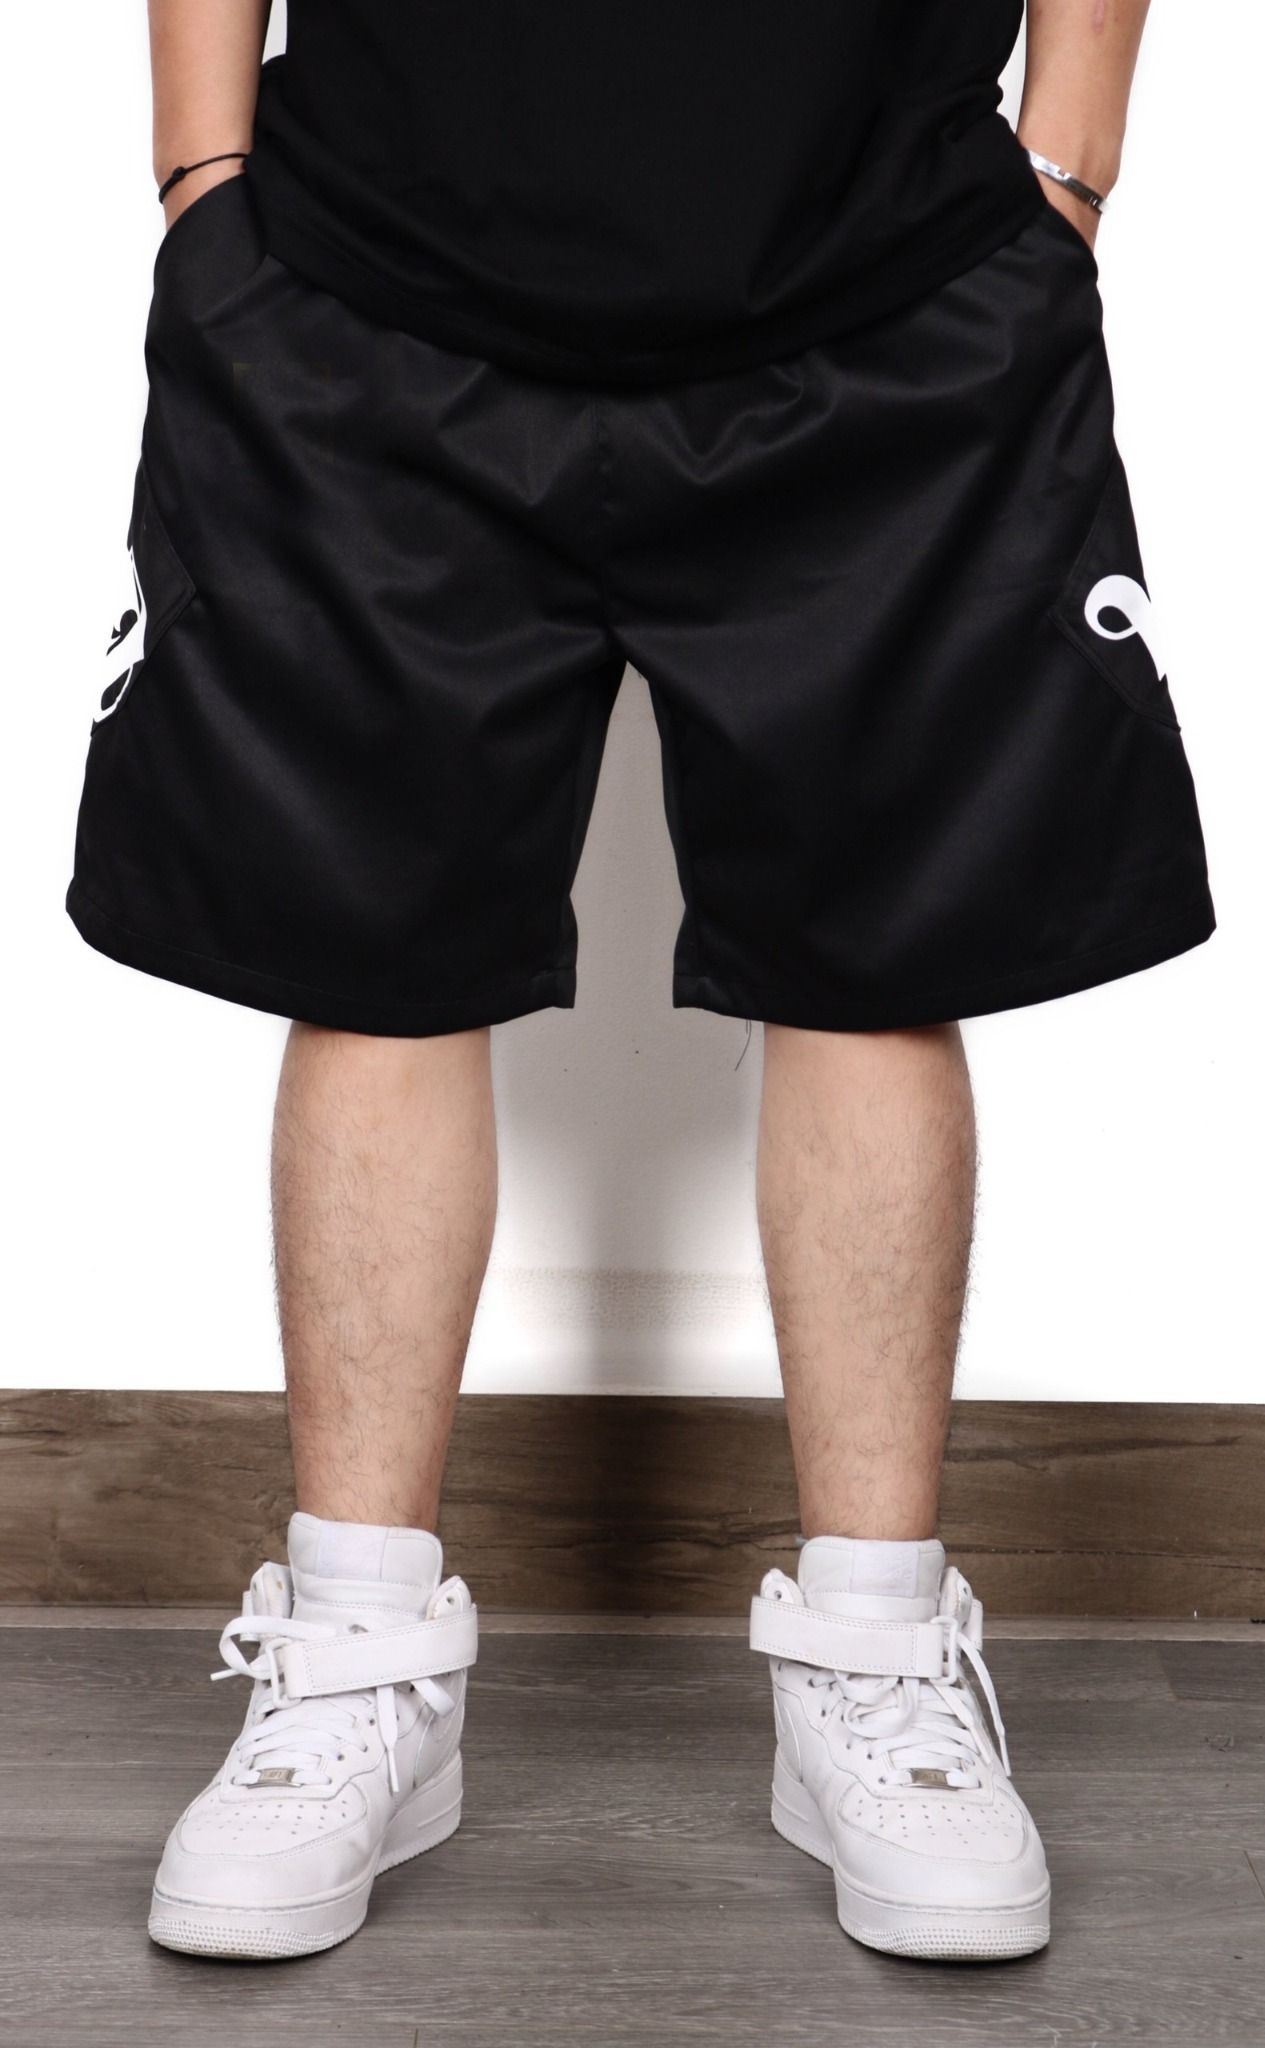  Apride 6 Pockets Shorts - Black&White 